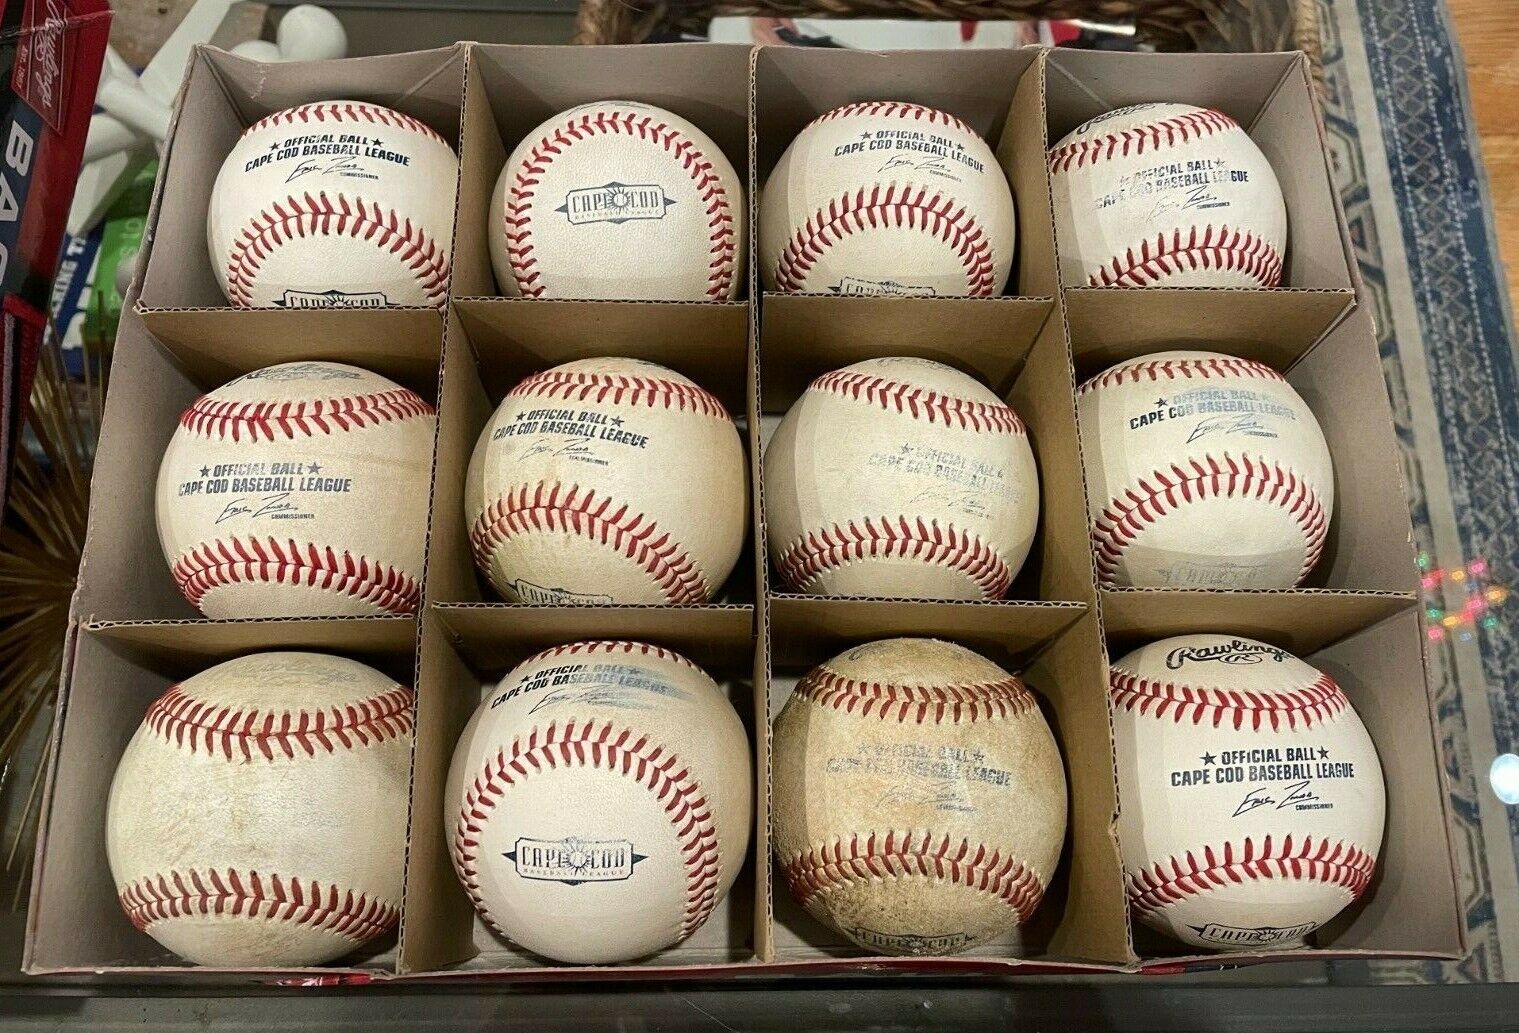 One Dozen 2021 Cape Cod Baseball League Game Used Rawlings Baseballs 